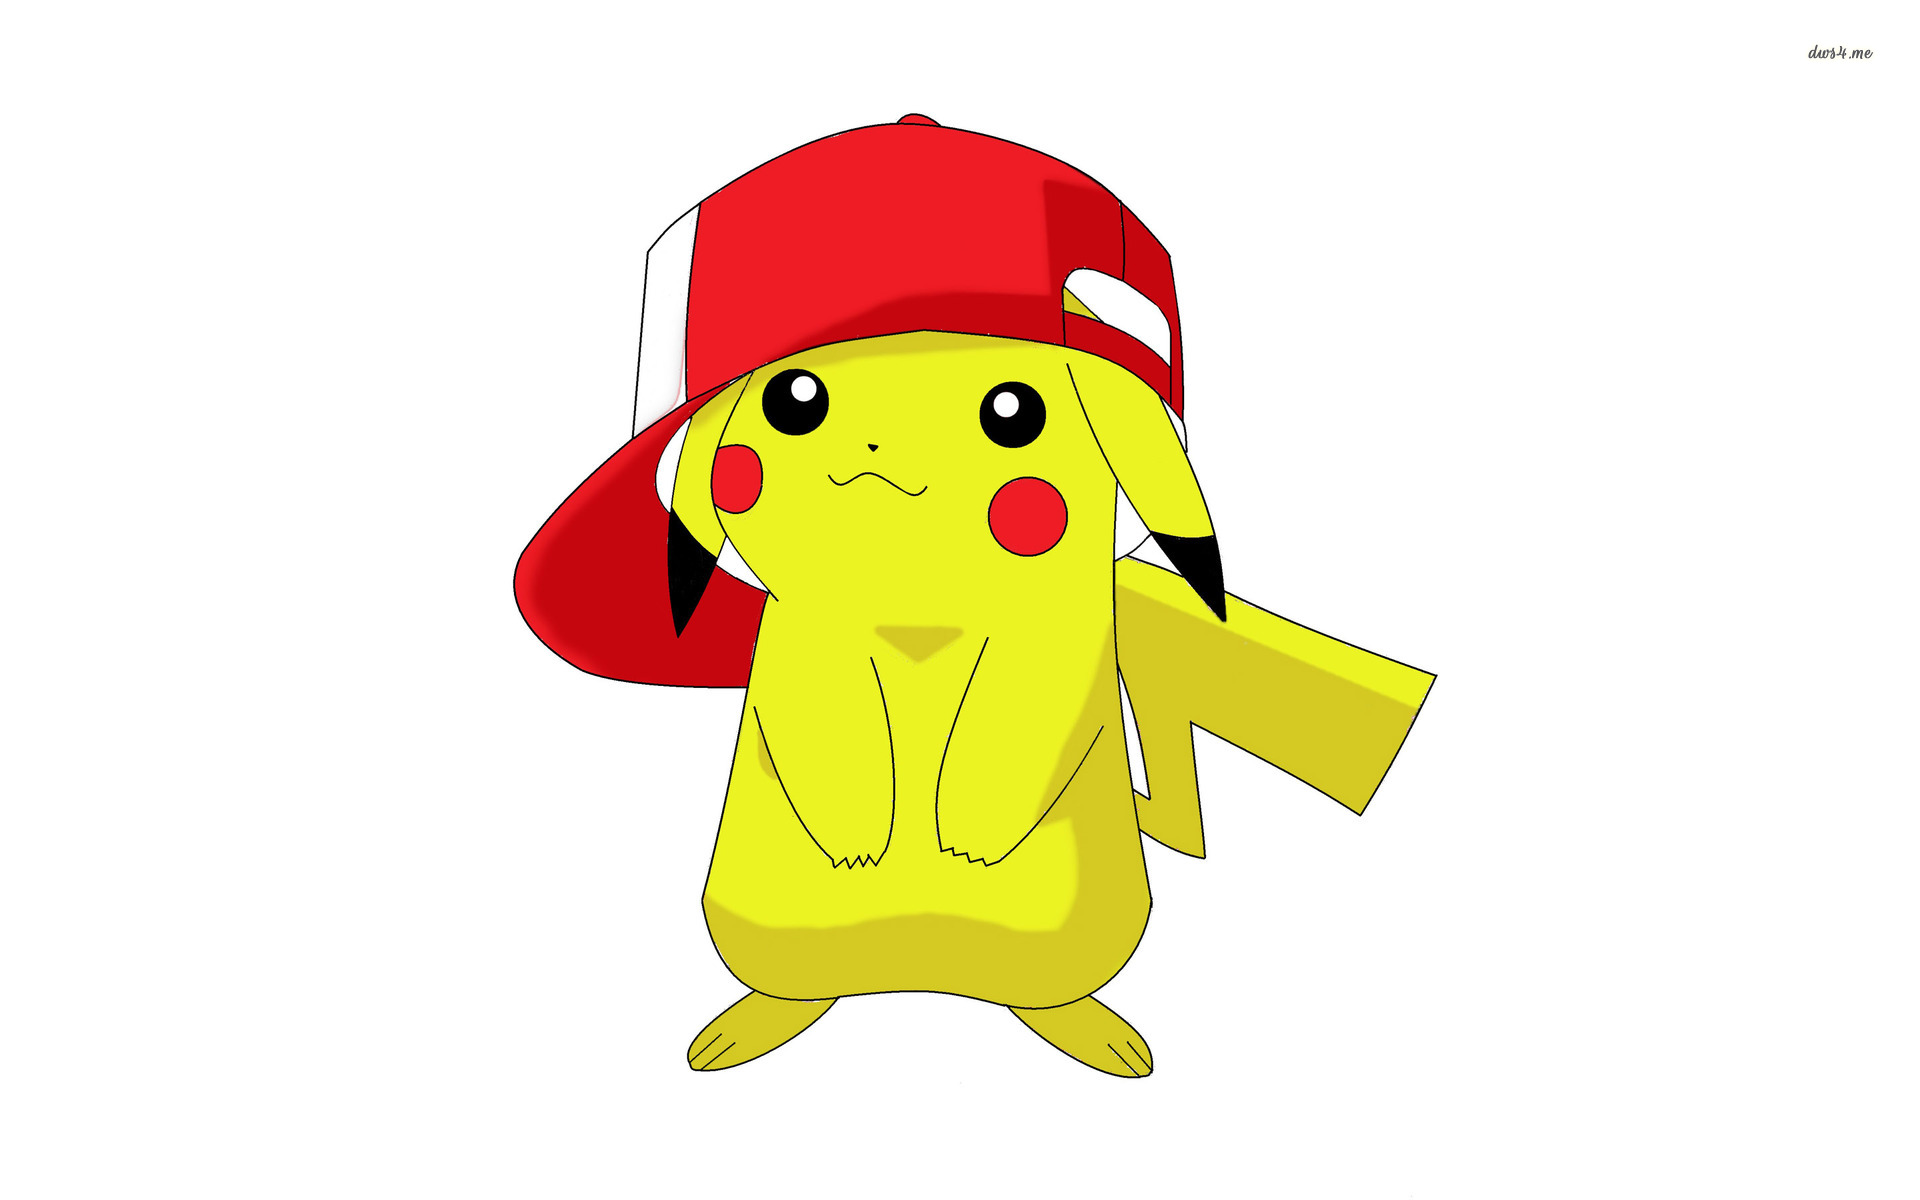 share pikachu wallpaper gallery to the pinterest facebook twitter